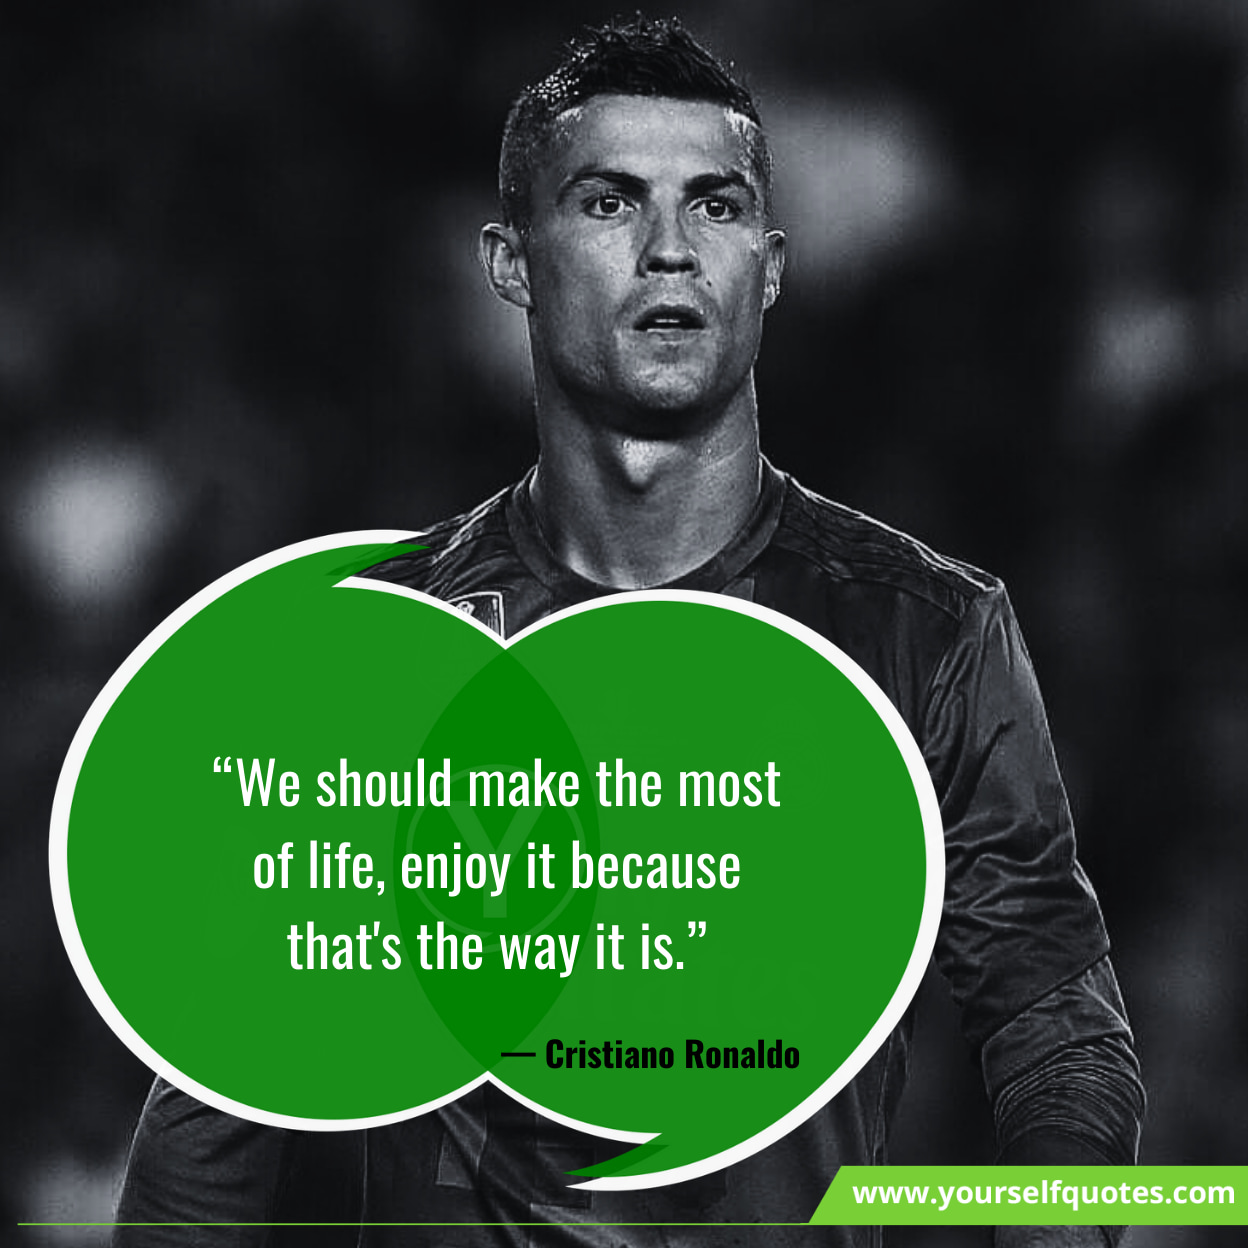 Cristiano Ronaldo Quotes About Life